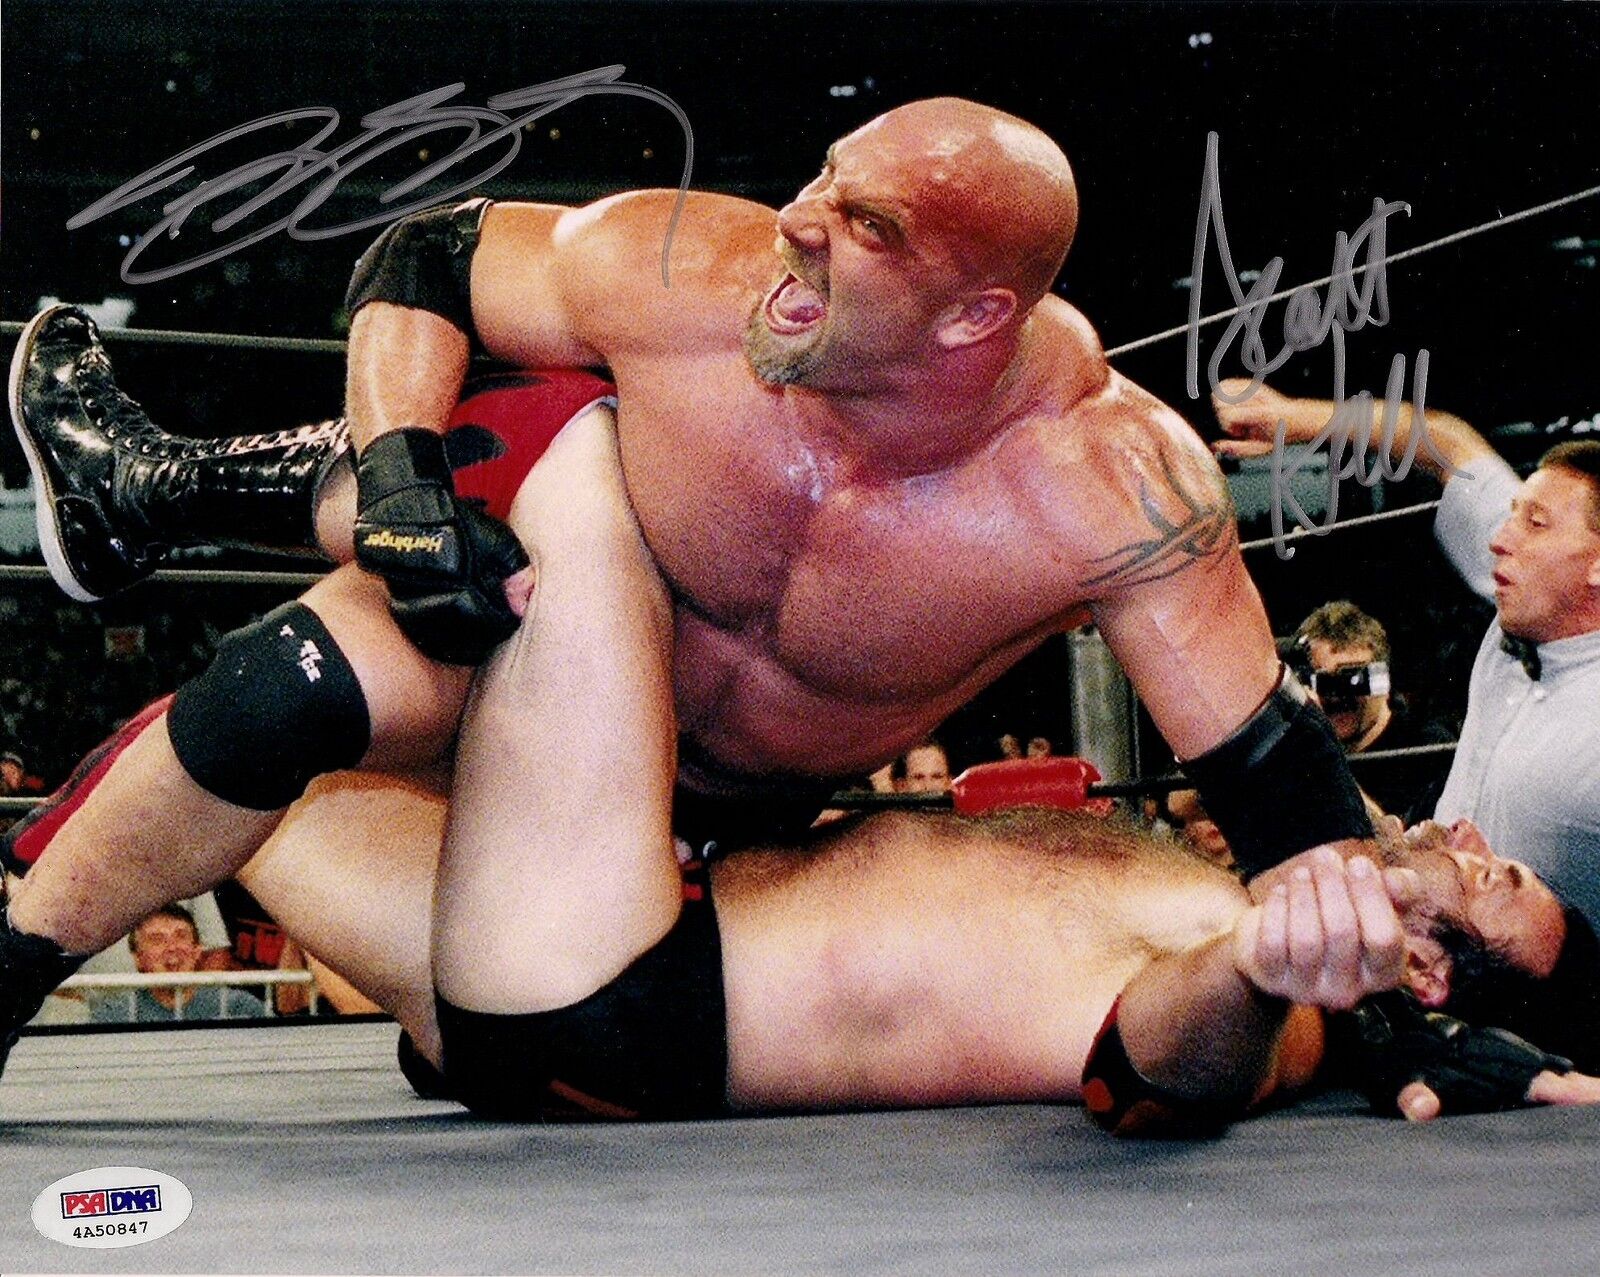 Scott Hall Bill Goldberg Signed WWE WCW 8x10 Photo Poster painting PSA/DNA COA NWO Auto Picture